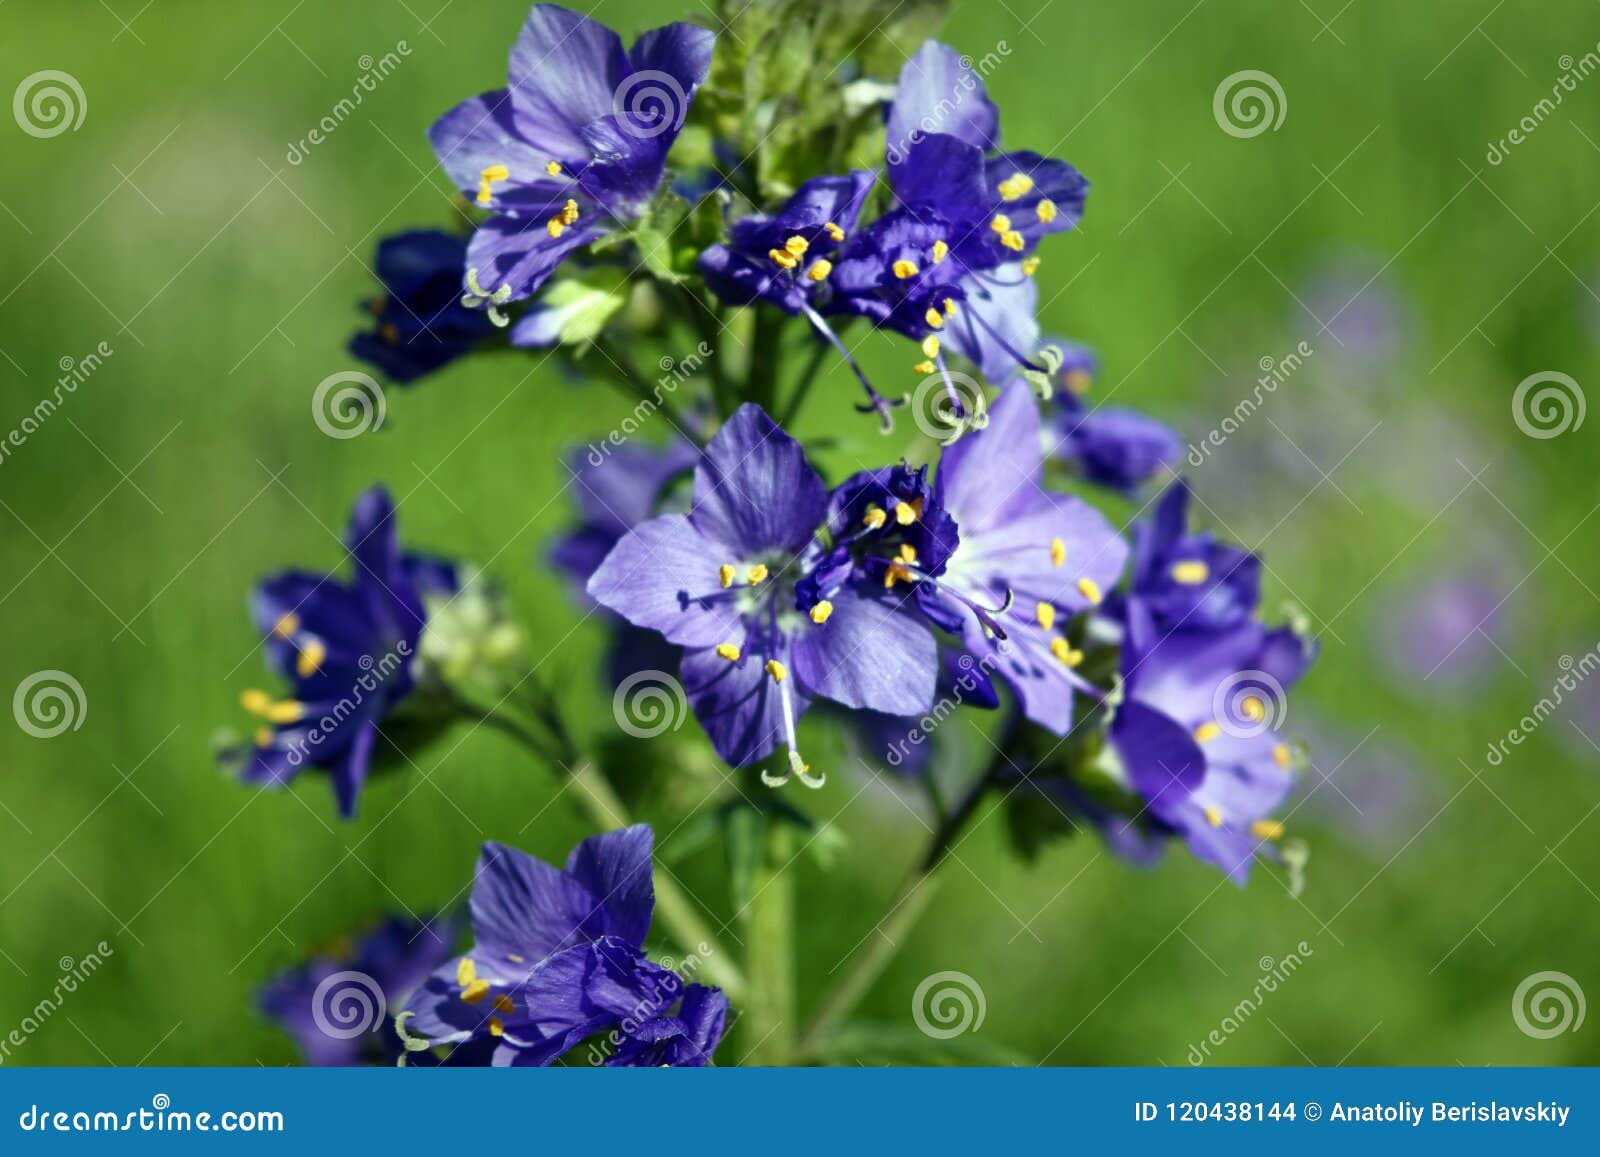 blue flowers polemonium caeruleum or jacob's-ladder